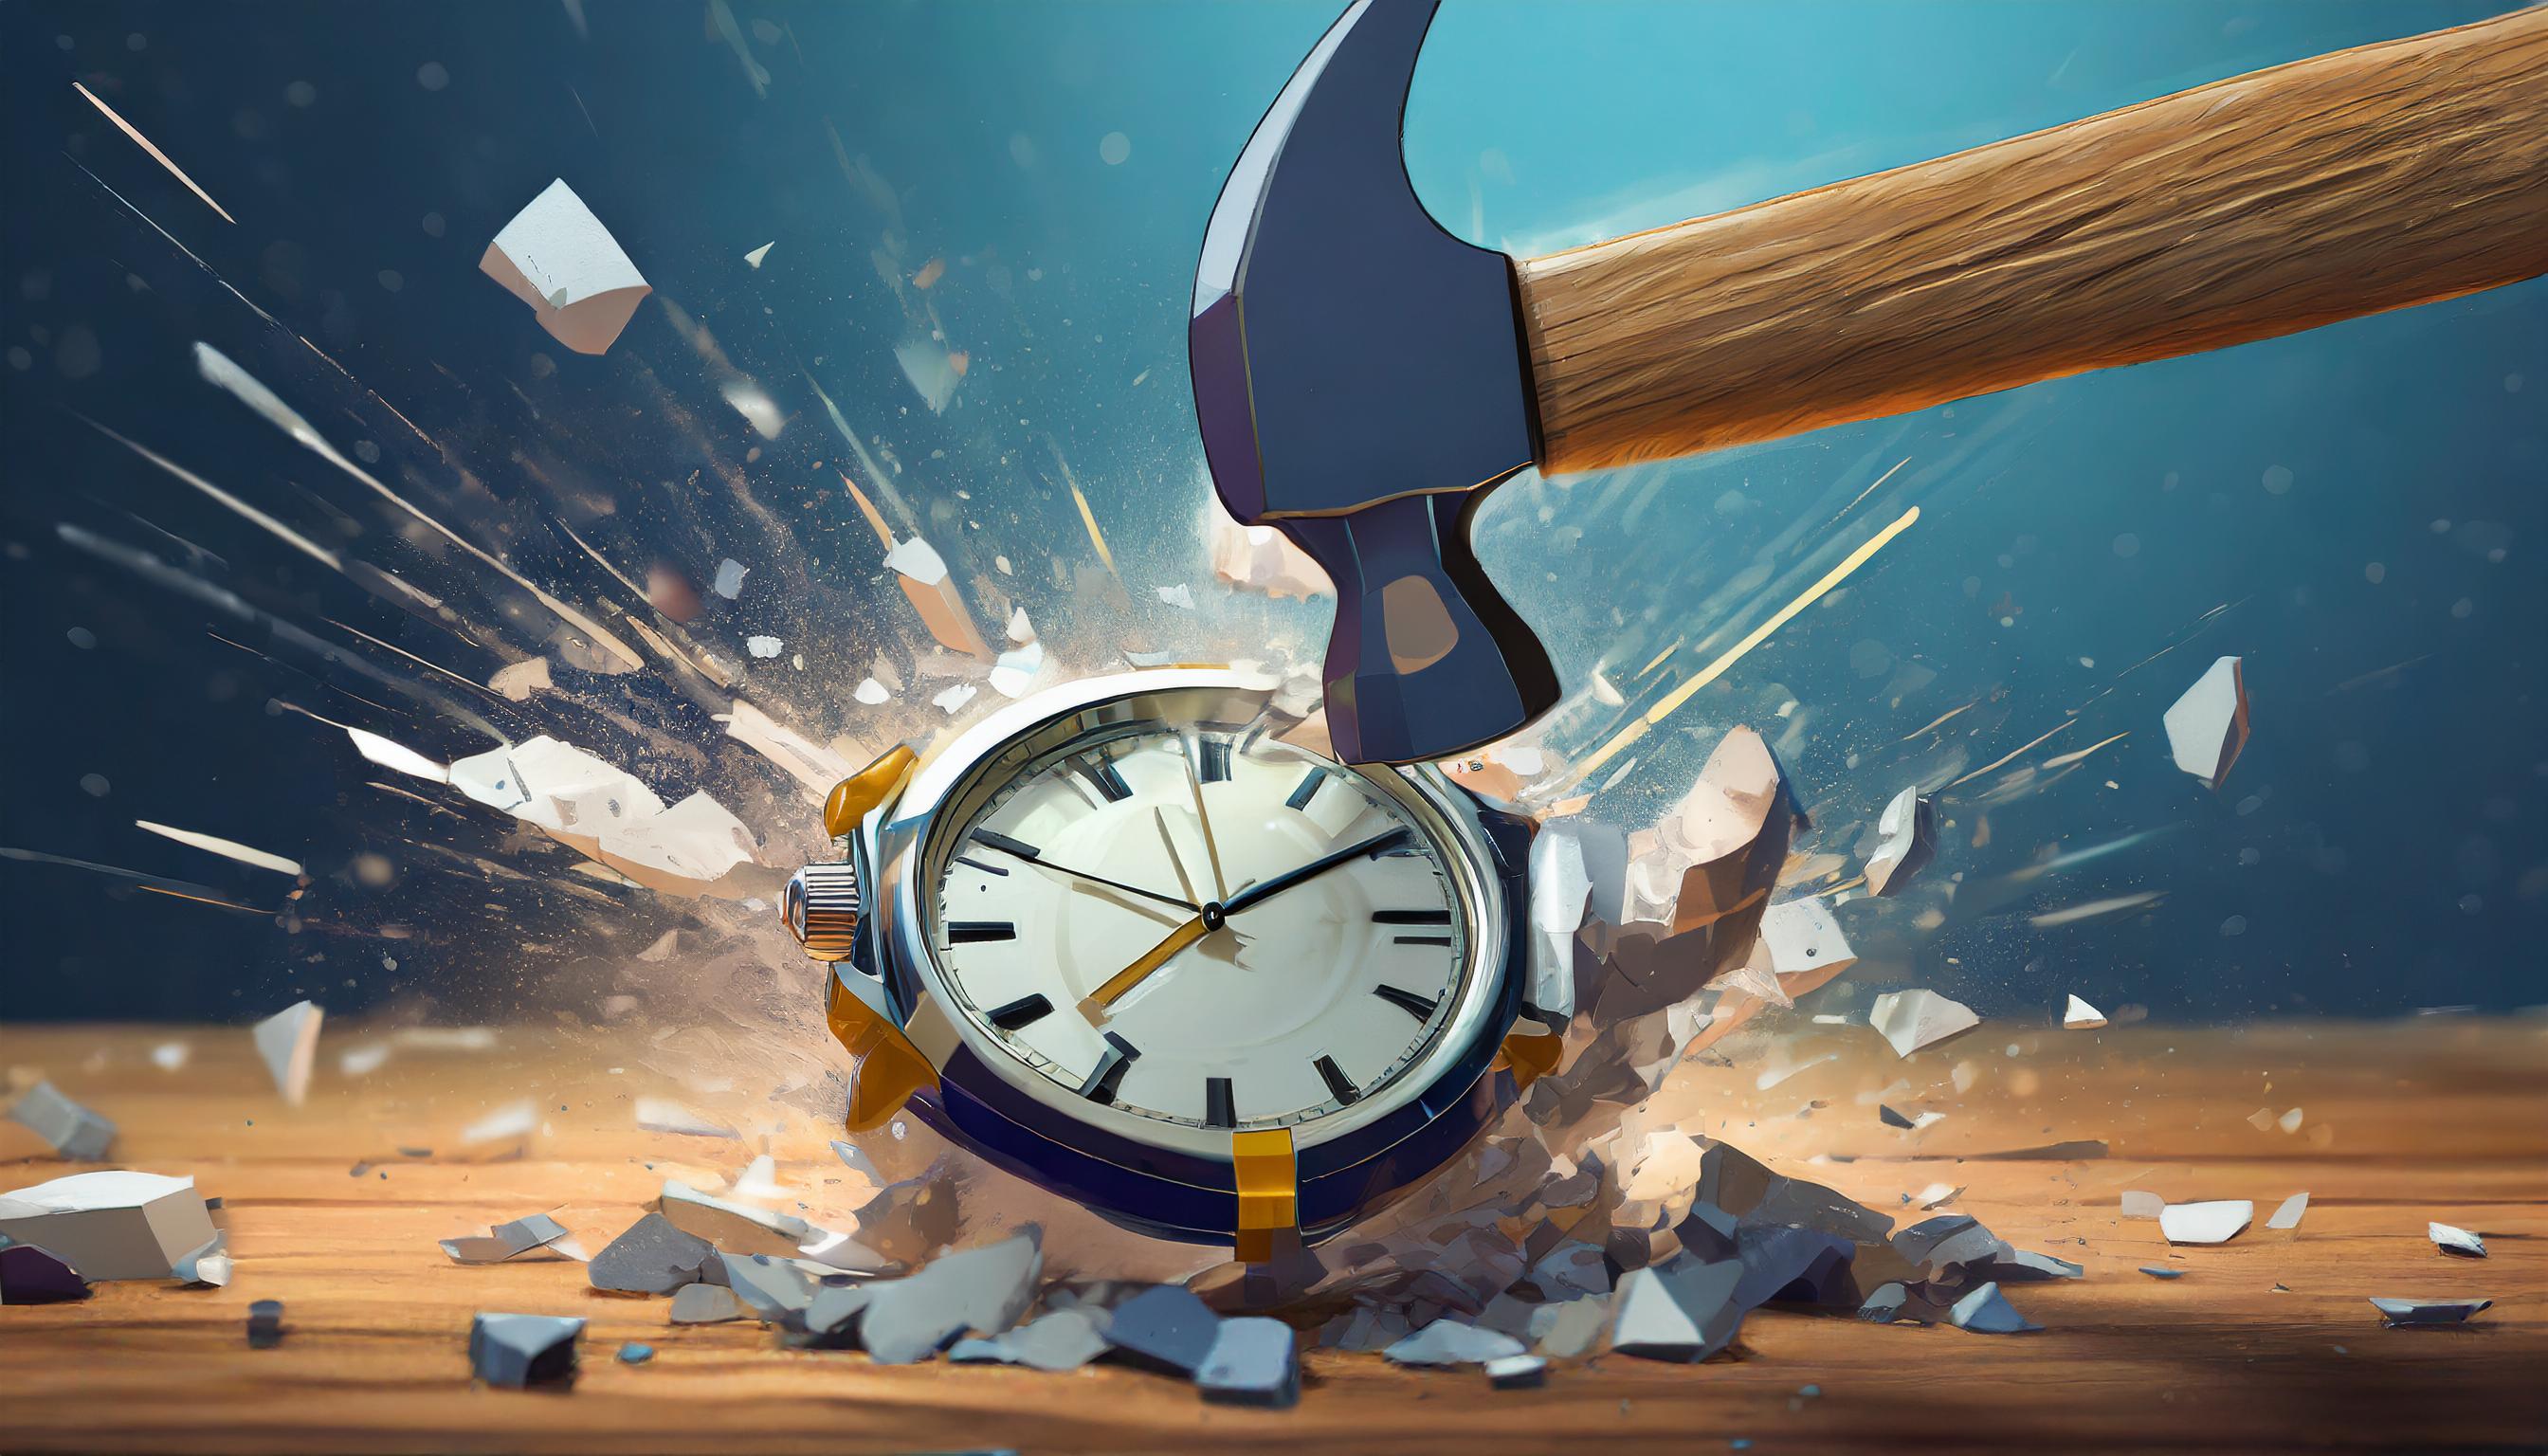 Image depicting a hammer striking a wristwatch